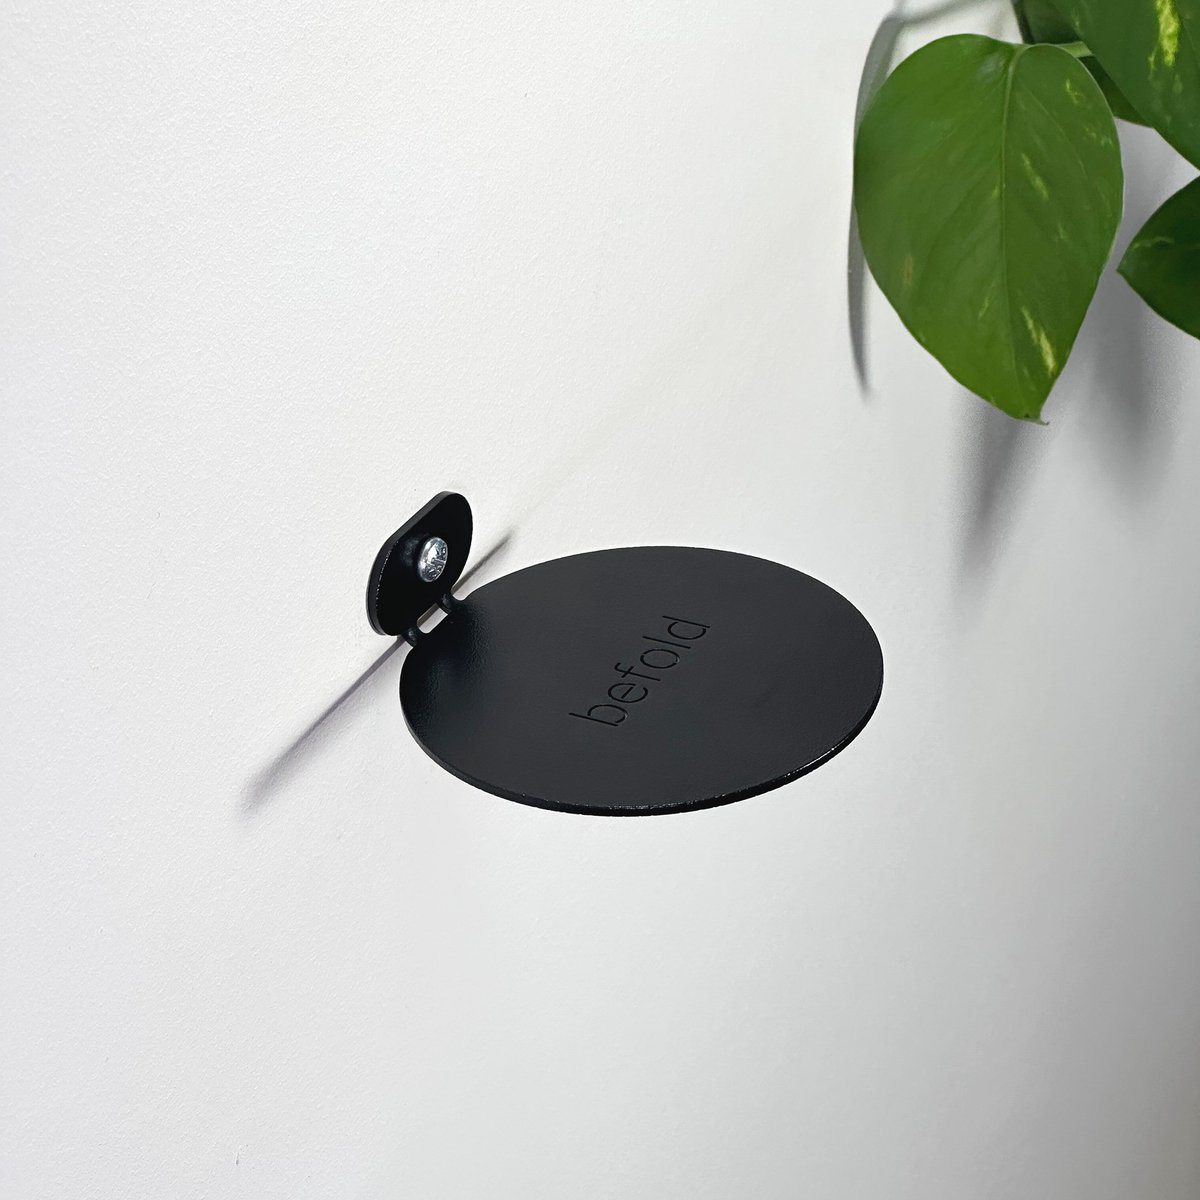 Befold plankje rond, 9cm, zwart - minimalistisch, zwevend, onzichtbaar, stalen muur/wand plankjes voor kleine plant, of design ornament